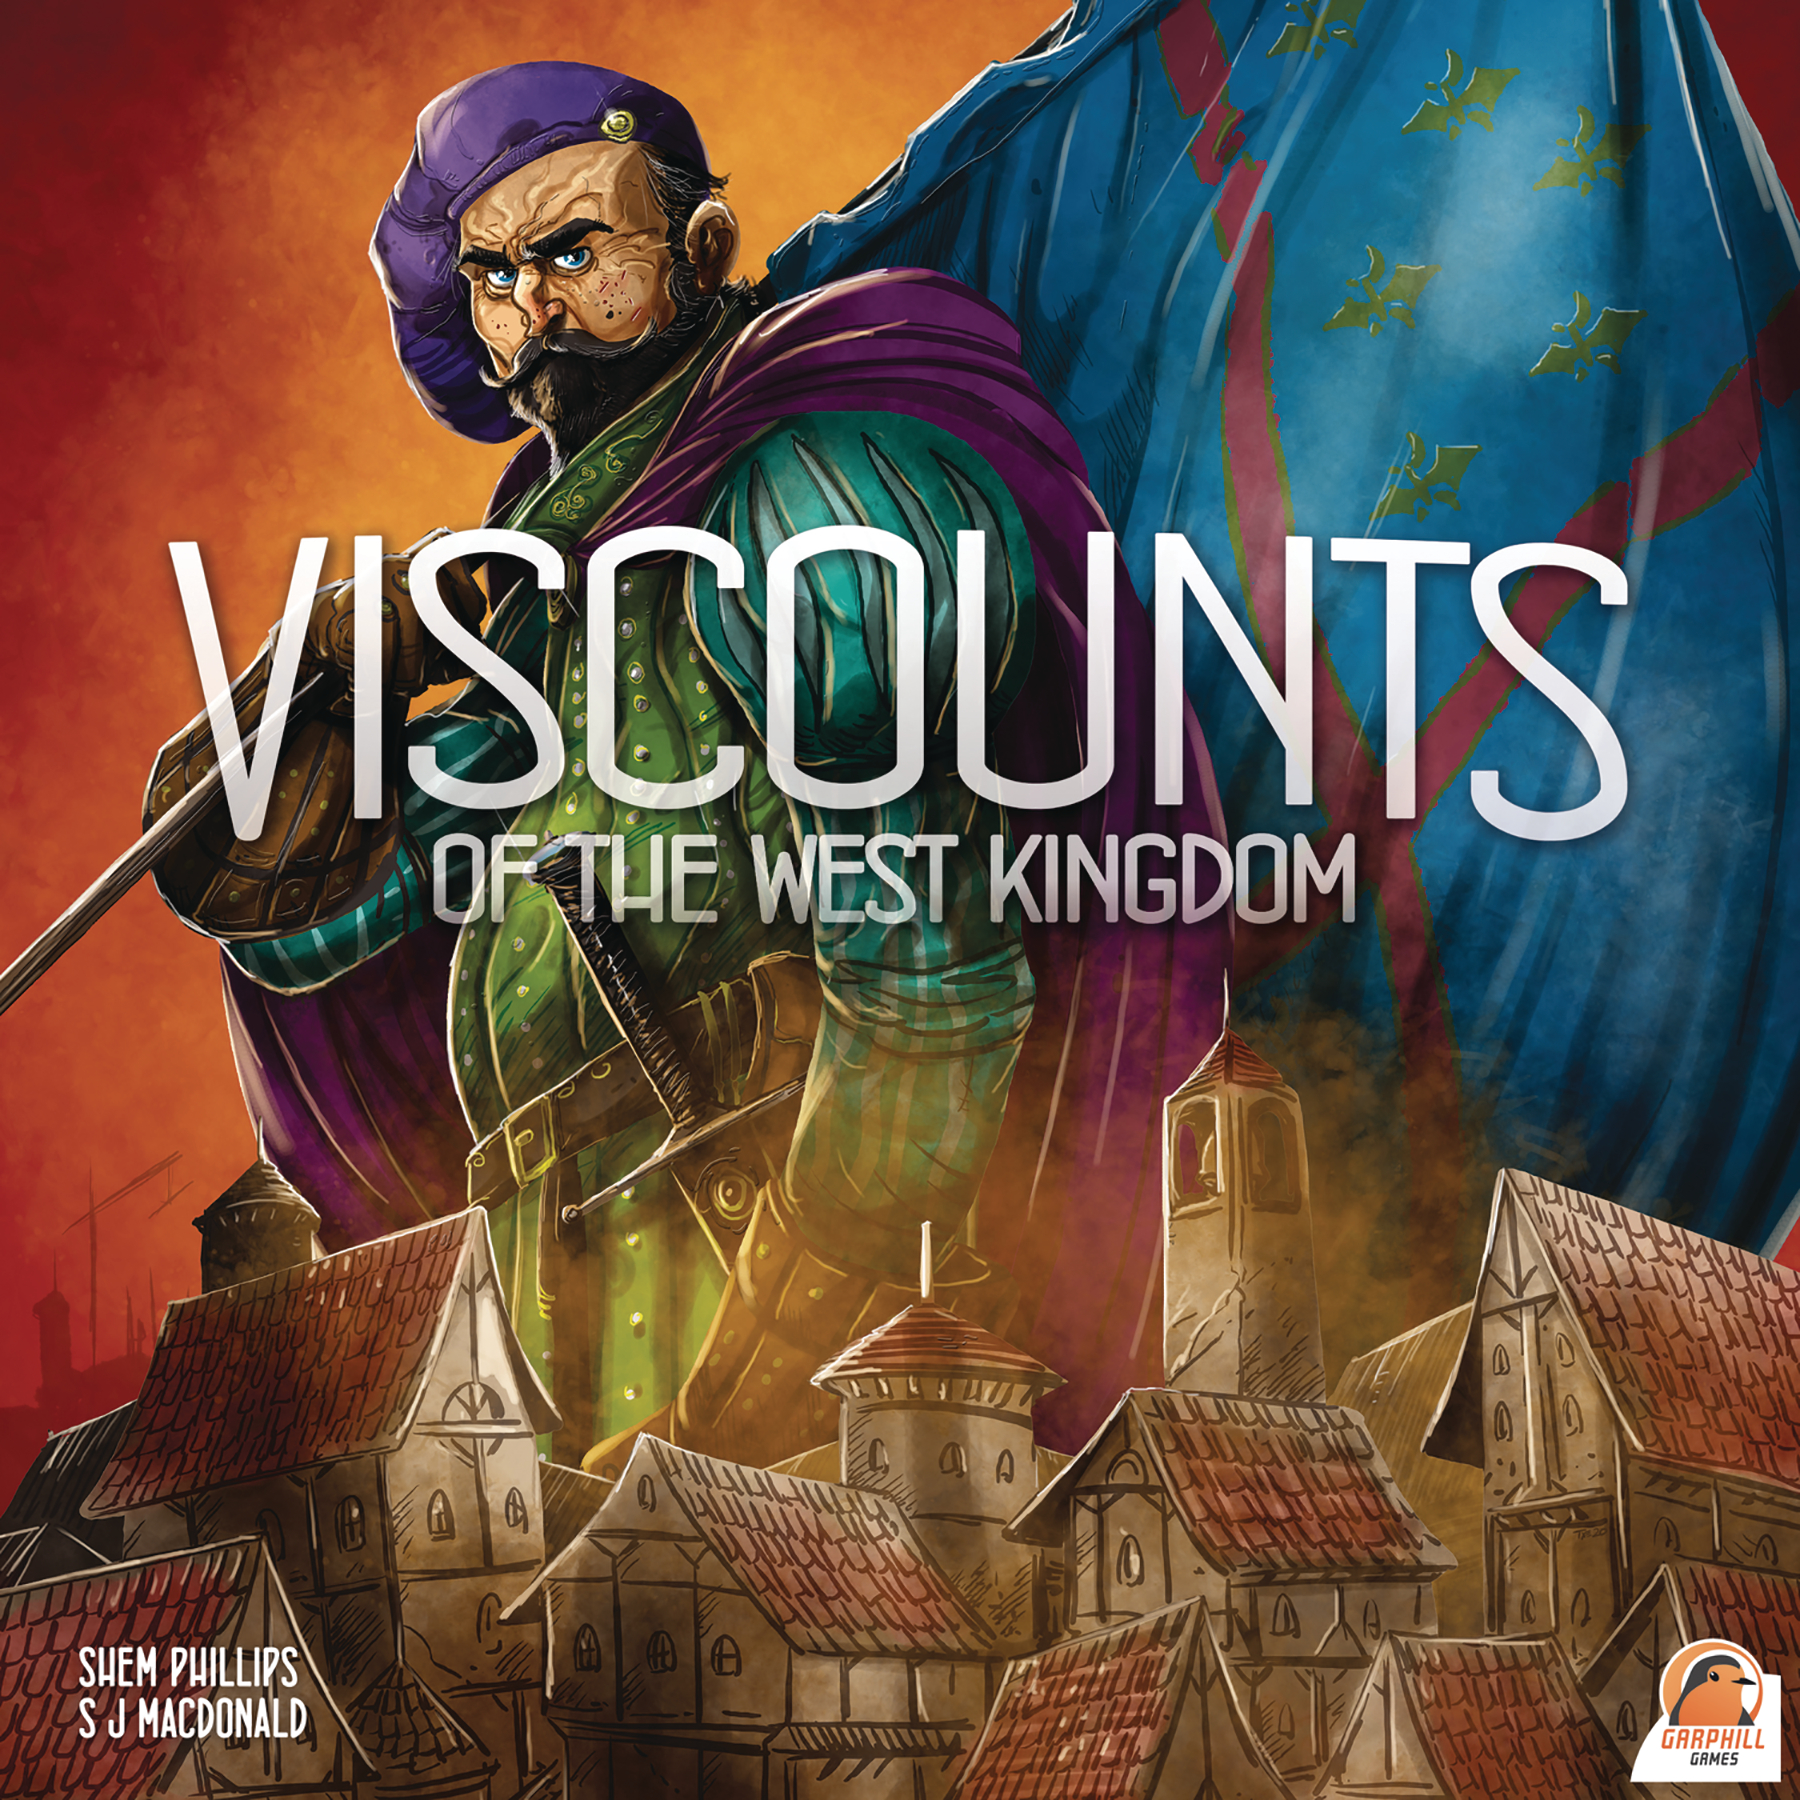 Viscounts West Kingdom Board Game